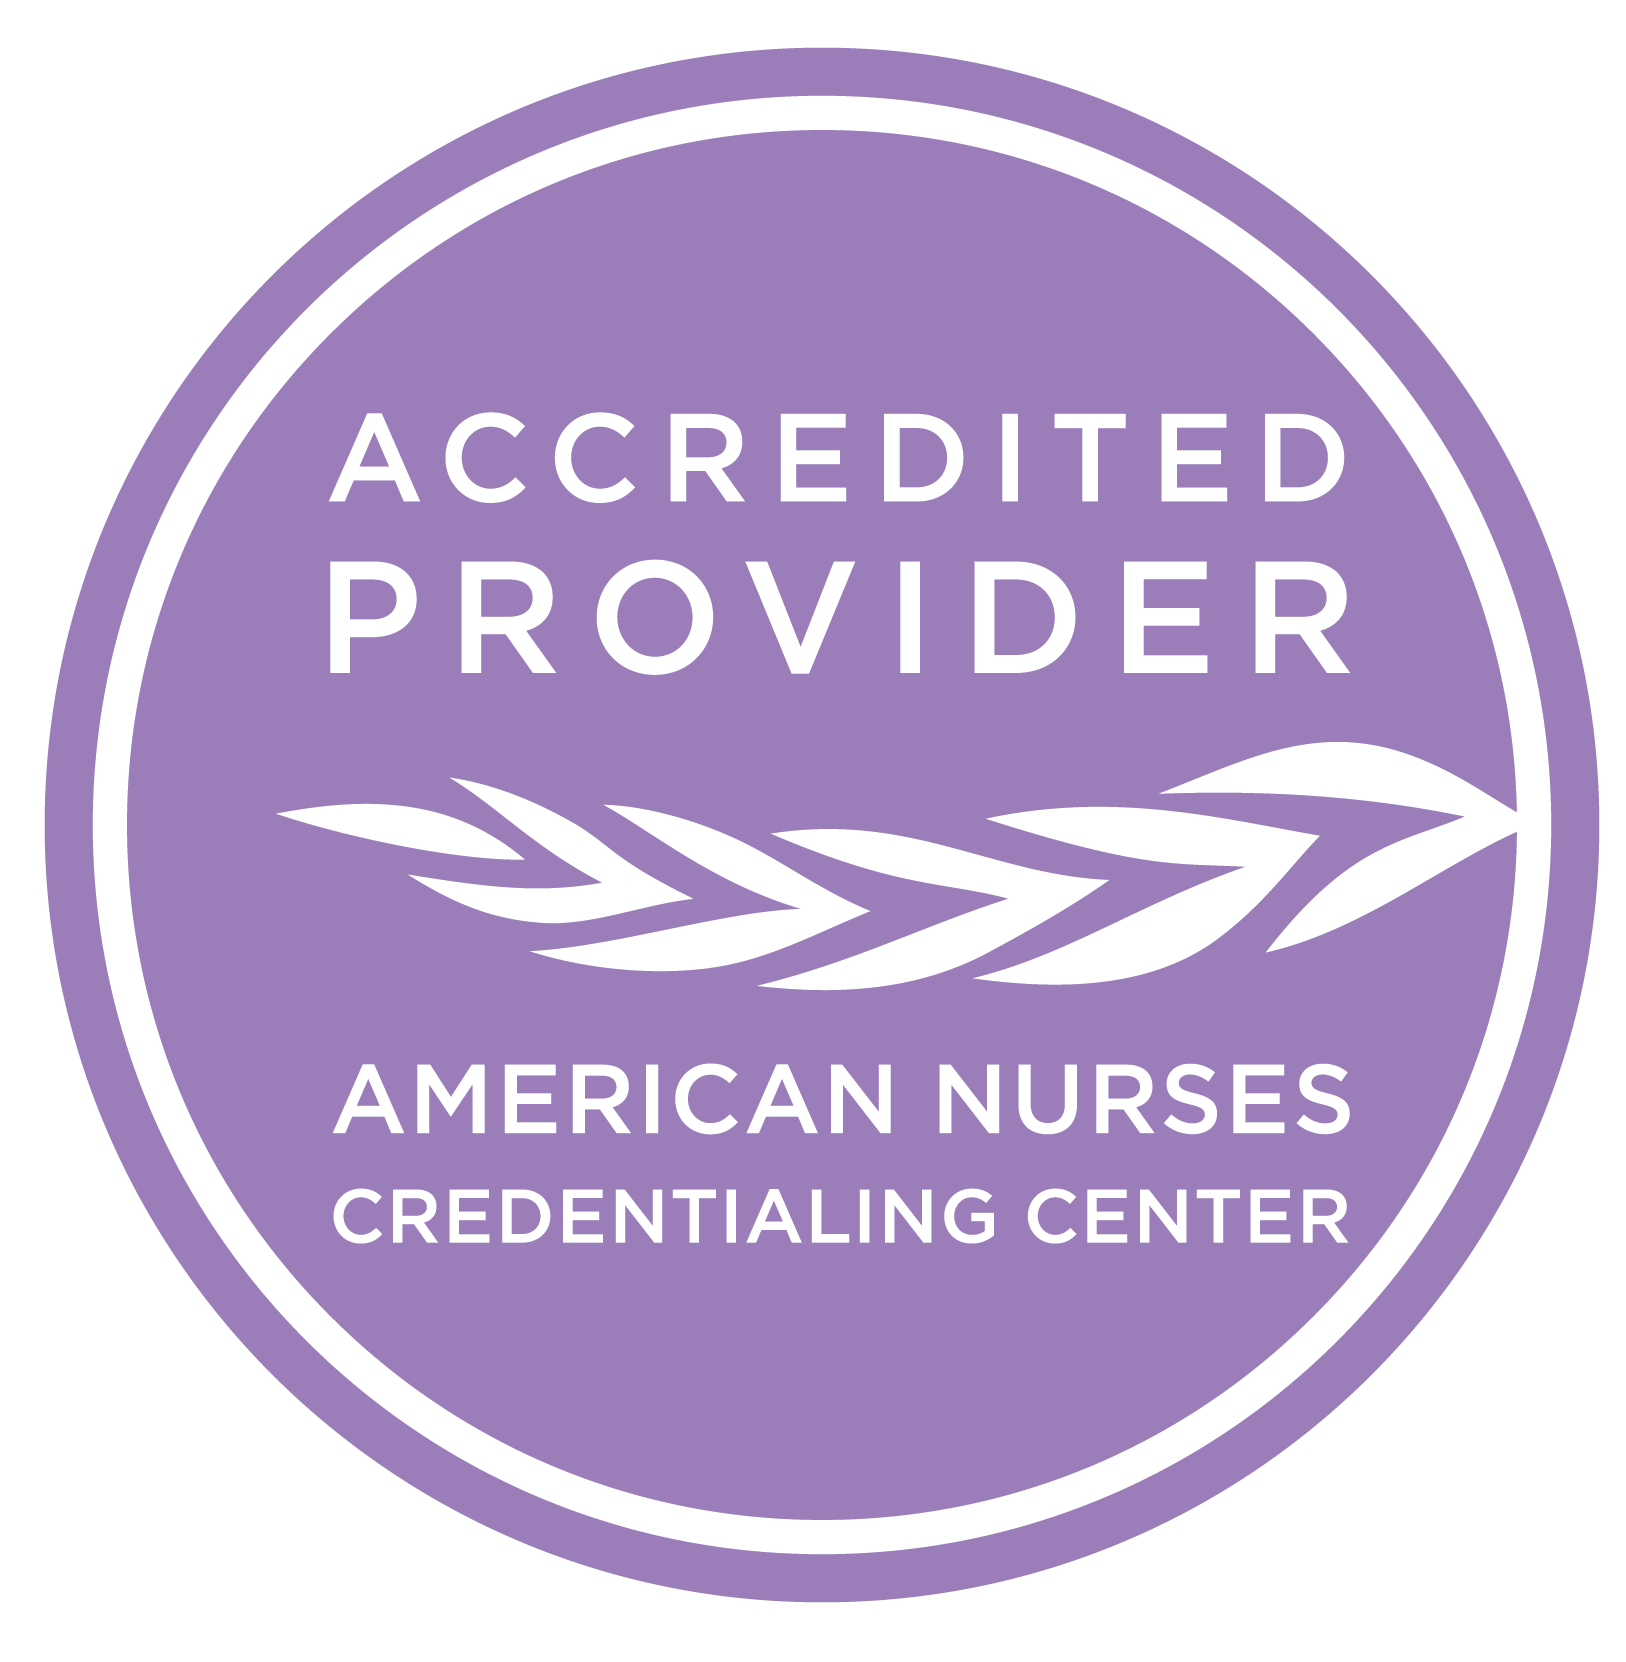 American Nurses Accredited Provider